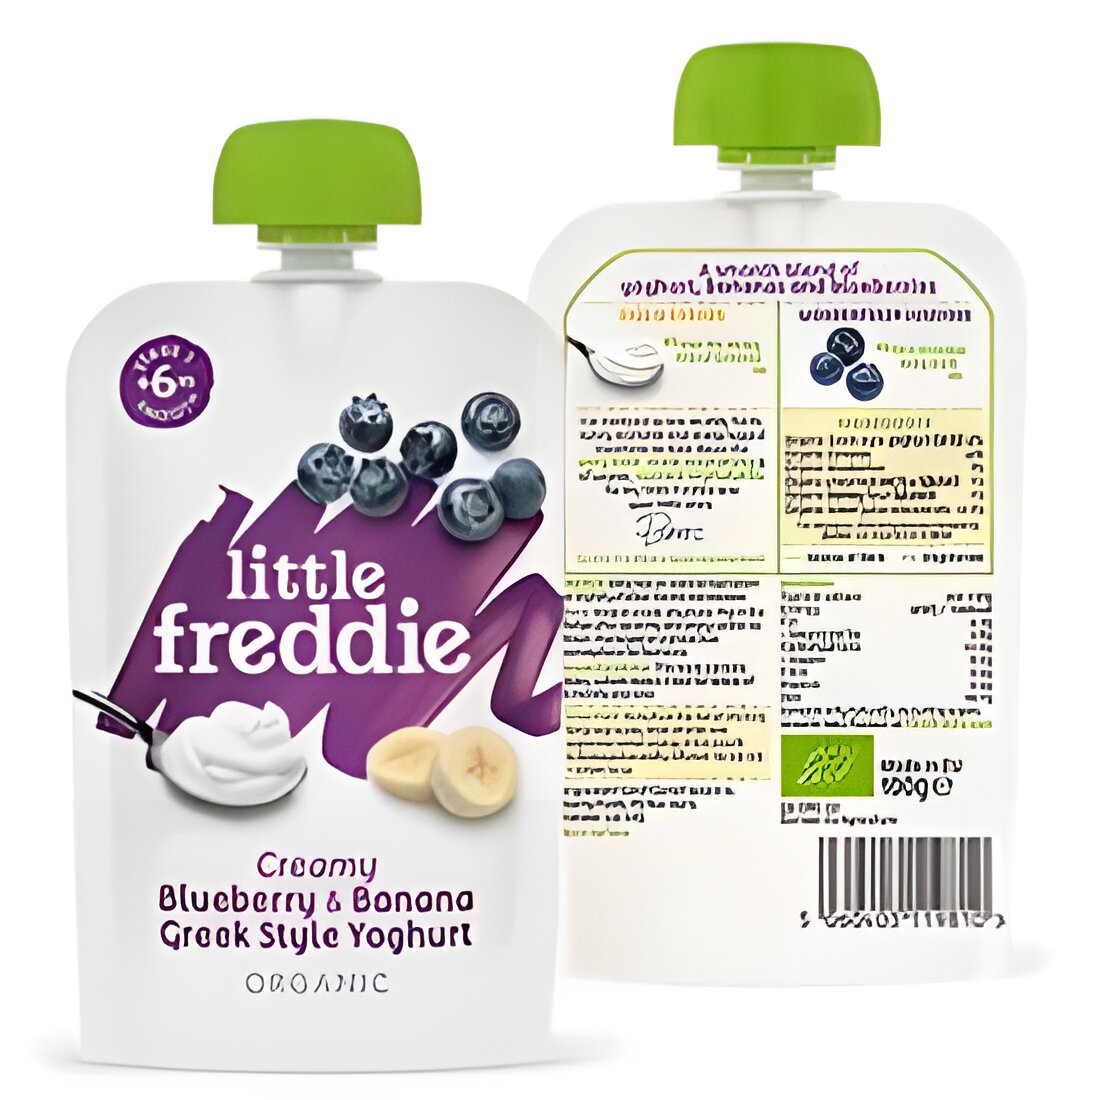 Free Little Freddie Blueberry & Banana Yoghurt